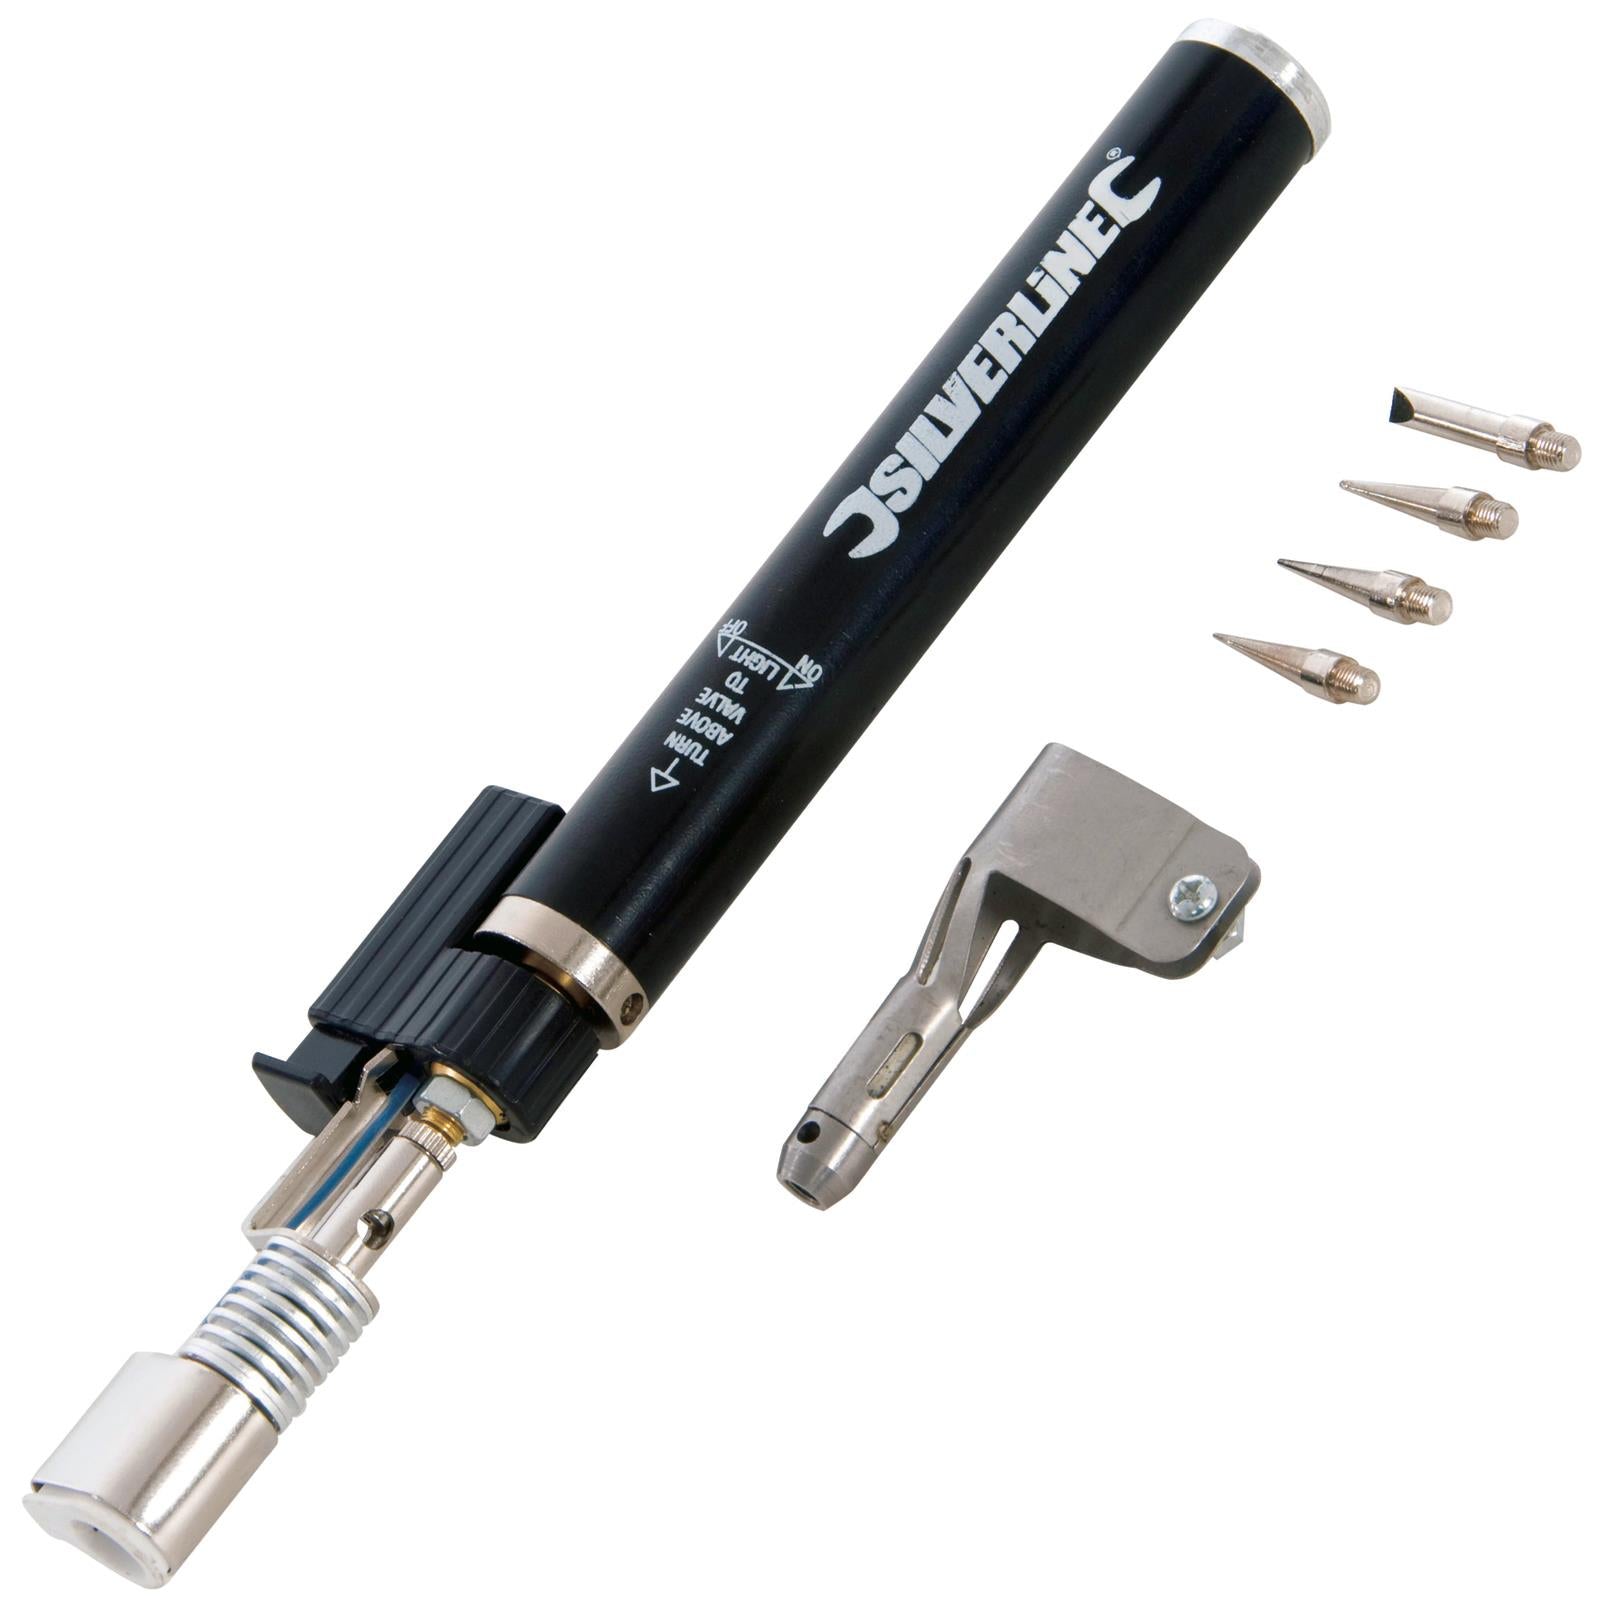 Silverline 195mm Gas Soldering Iron Pen Heat Control Lighter Fuel